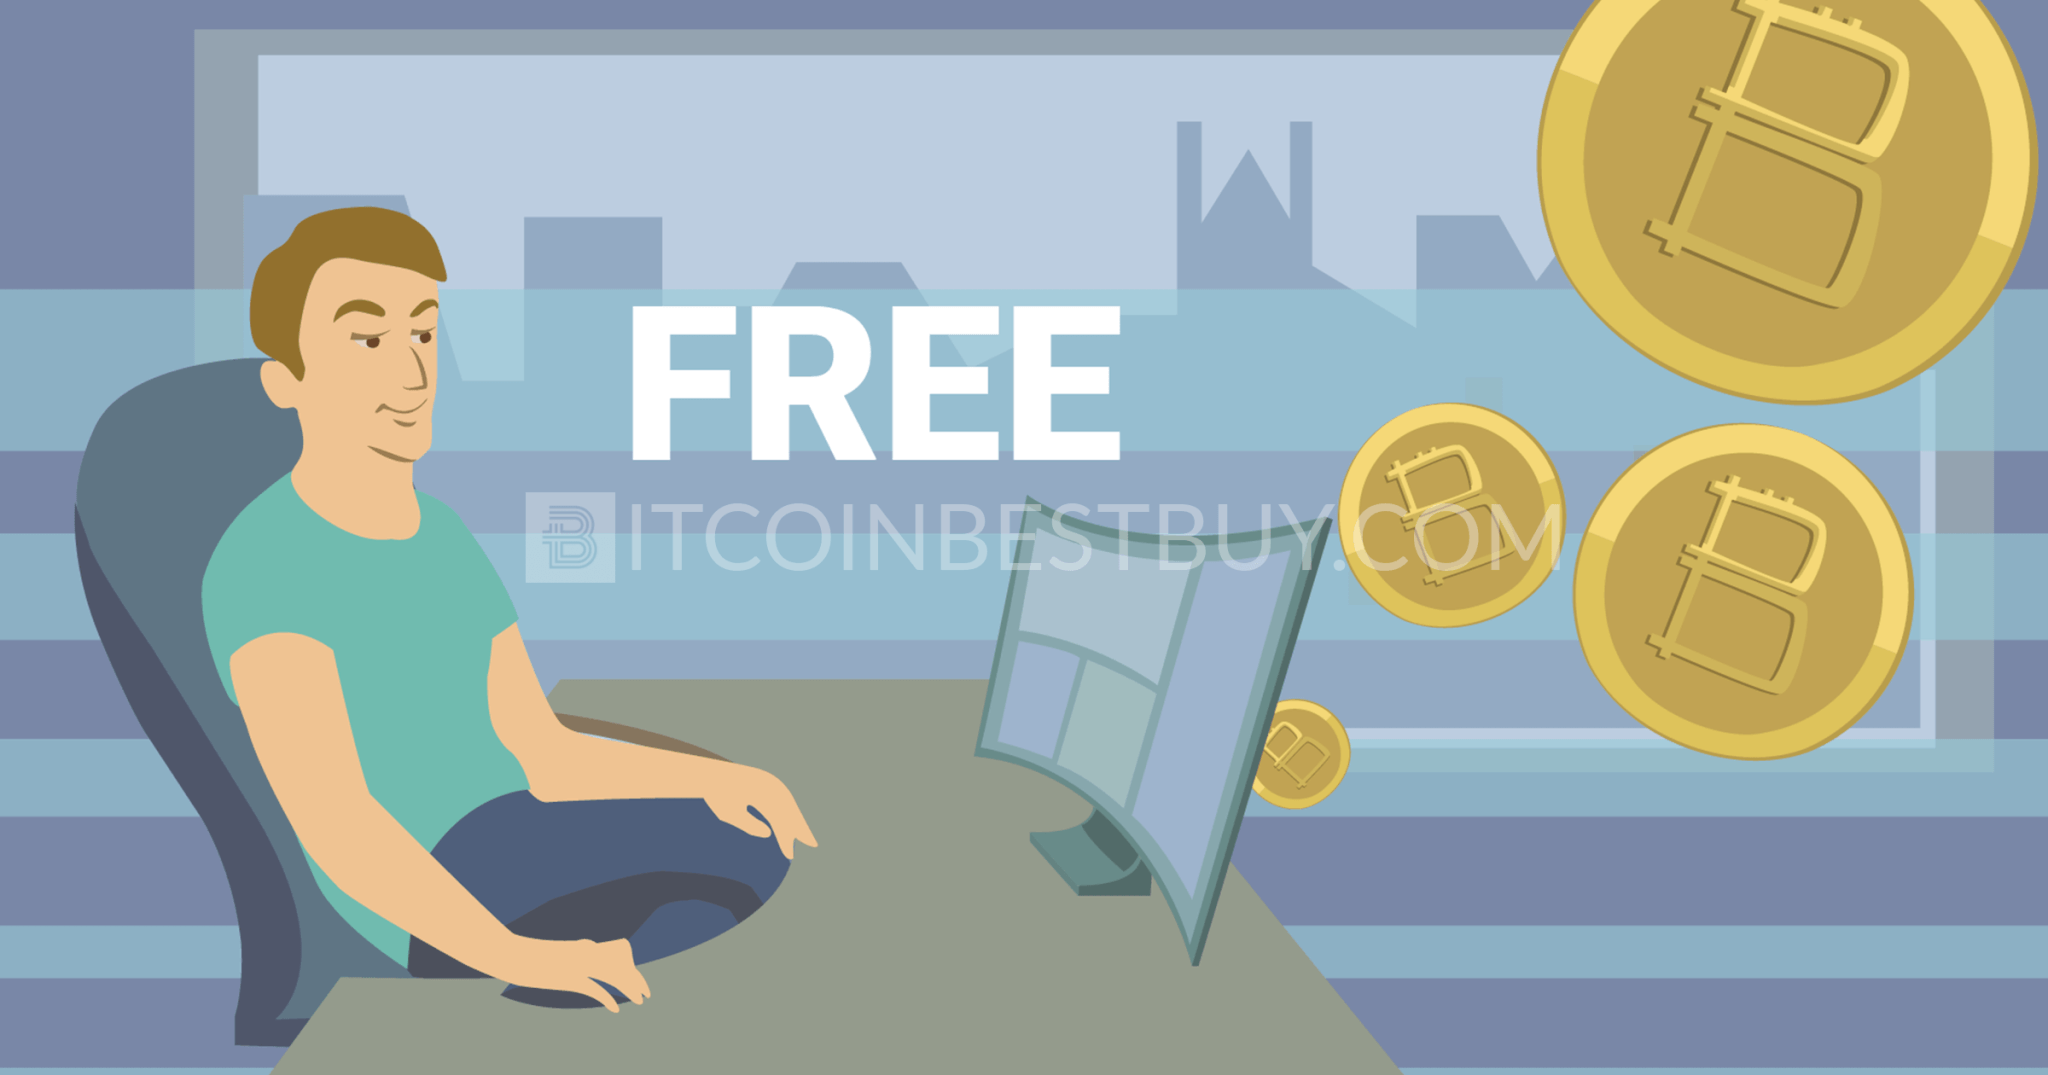 H!   ow To Get Free Bitcoins Best Ways To Earn Btc Bitcoinbestbuy - 